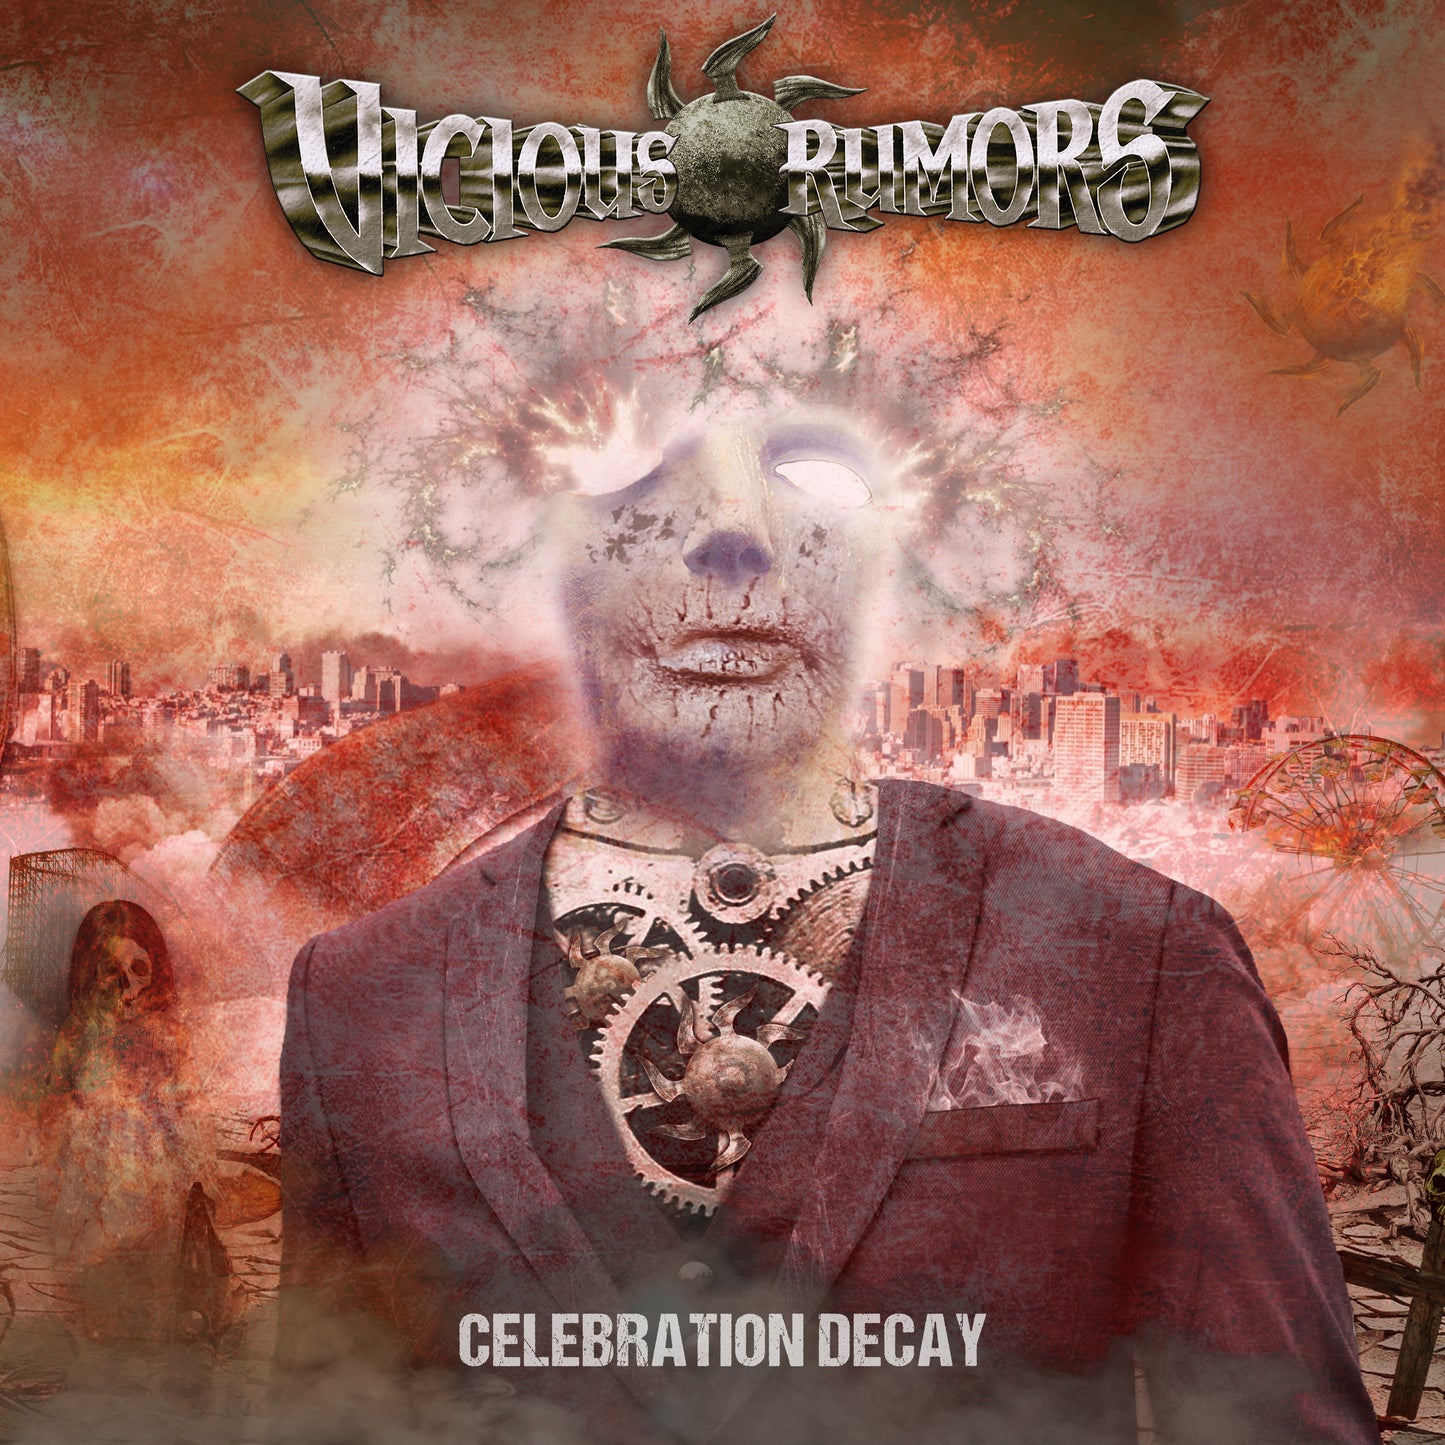 Vicious Rumors "Celebration Decay" CD